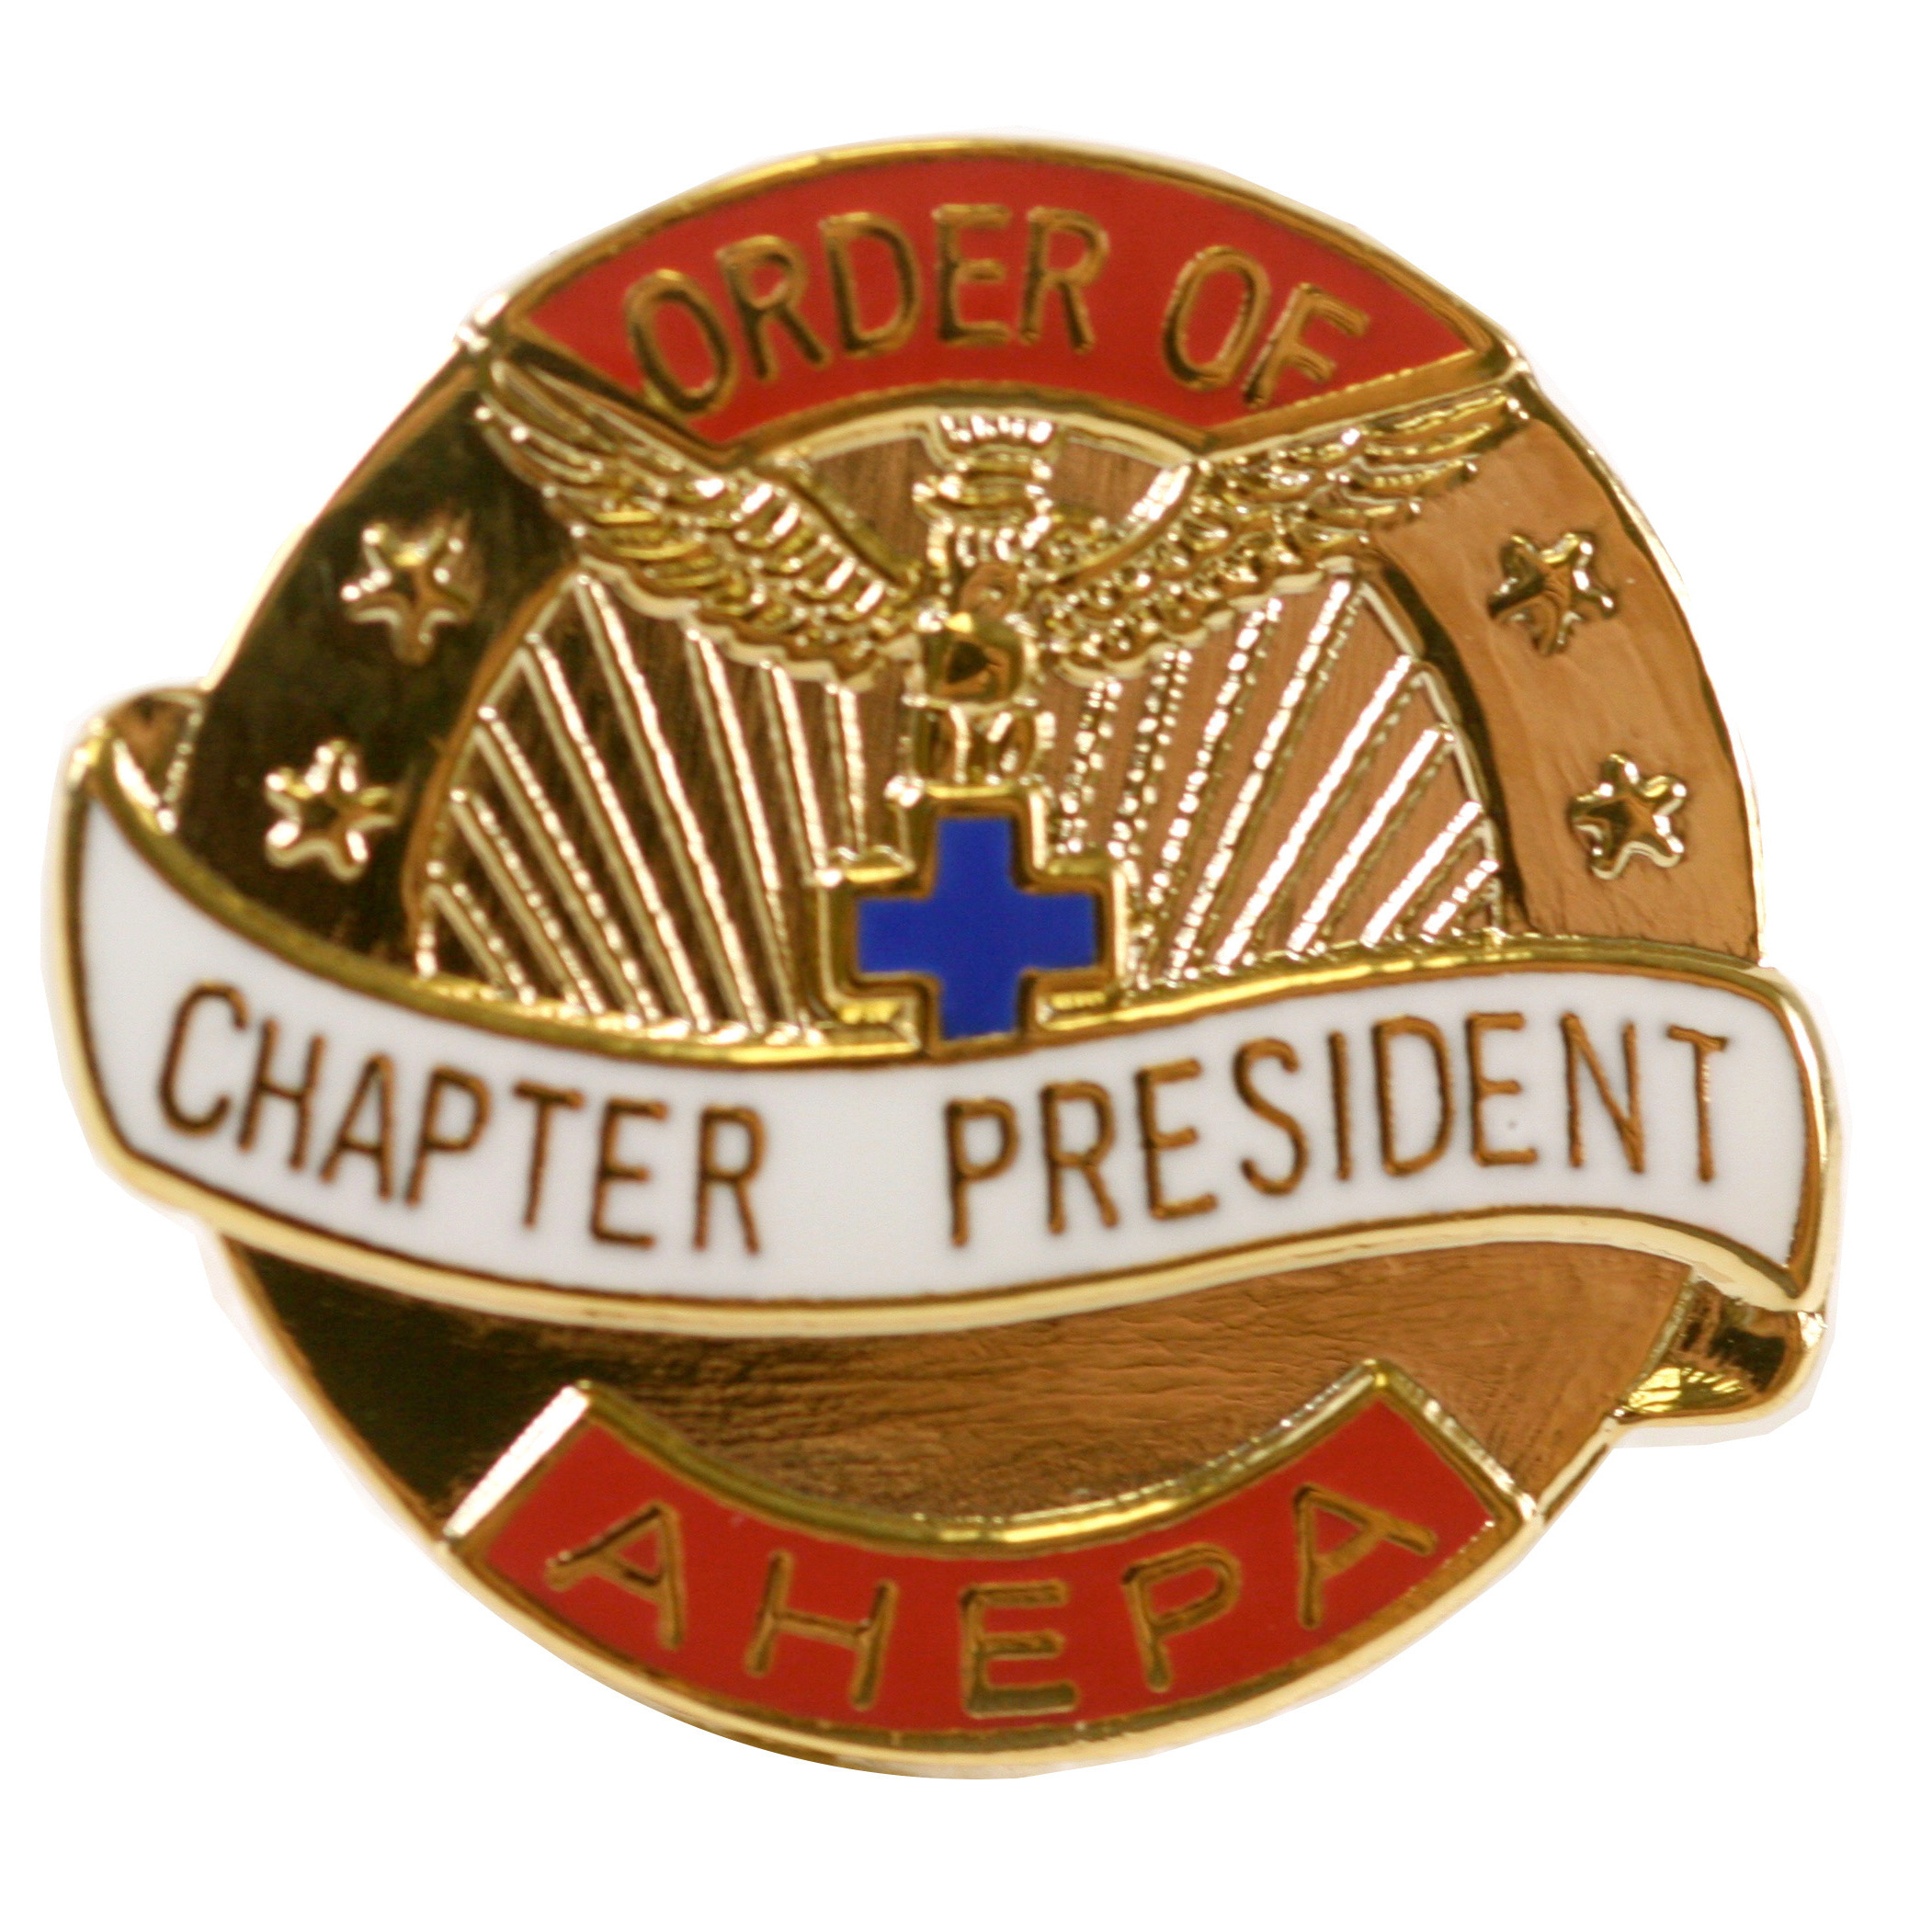 Julie of California / Logo Emblem - AHEPA Officer Pins - All Offices #